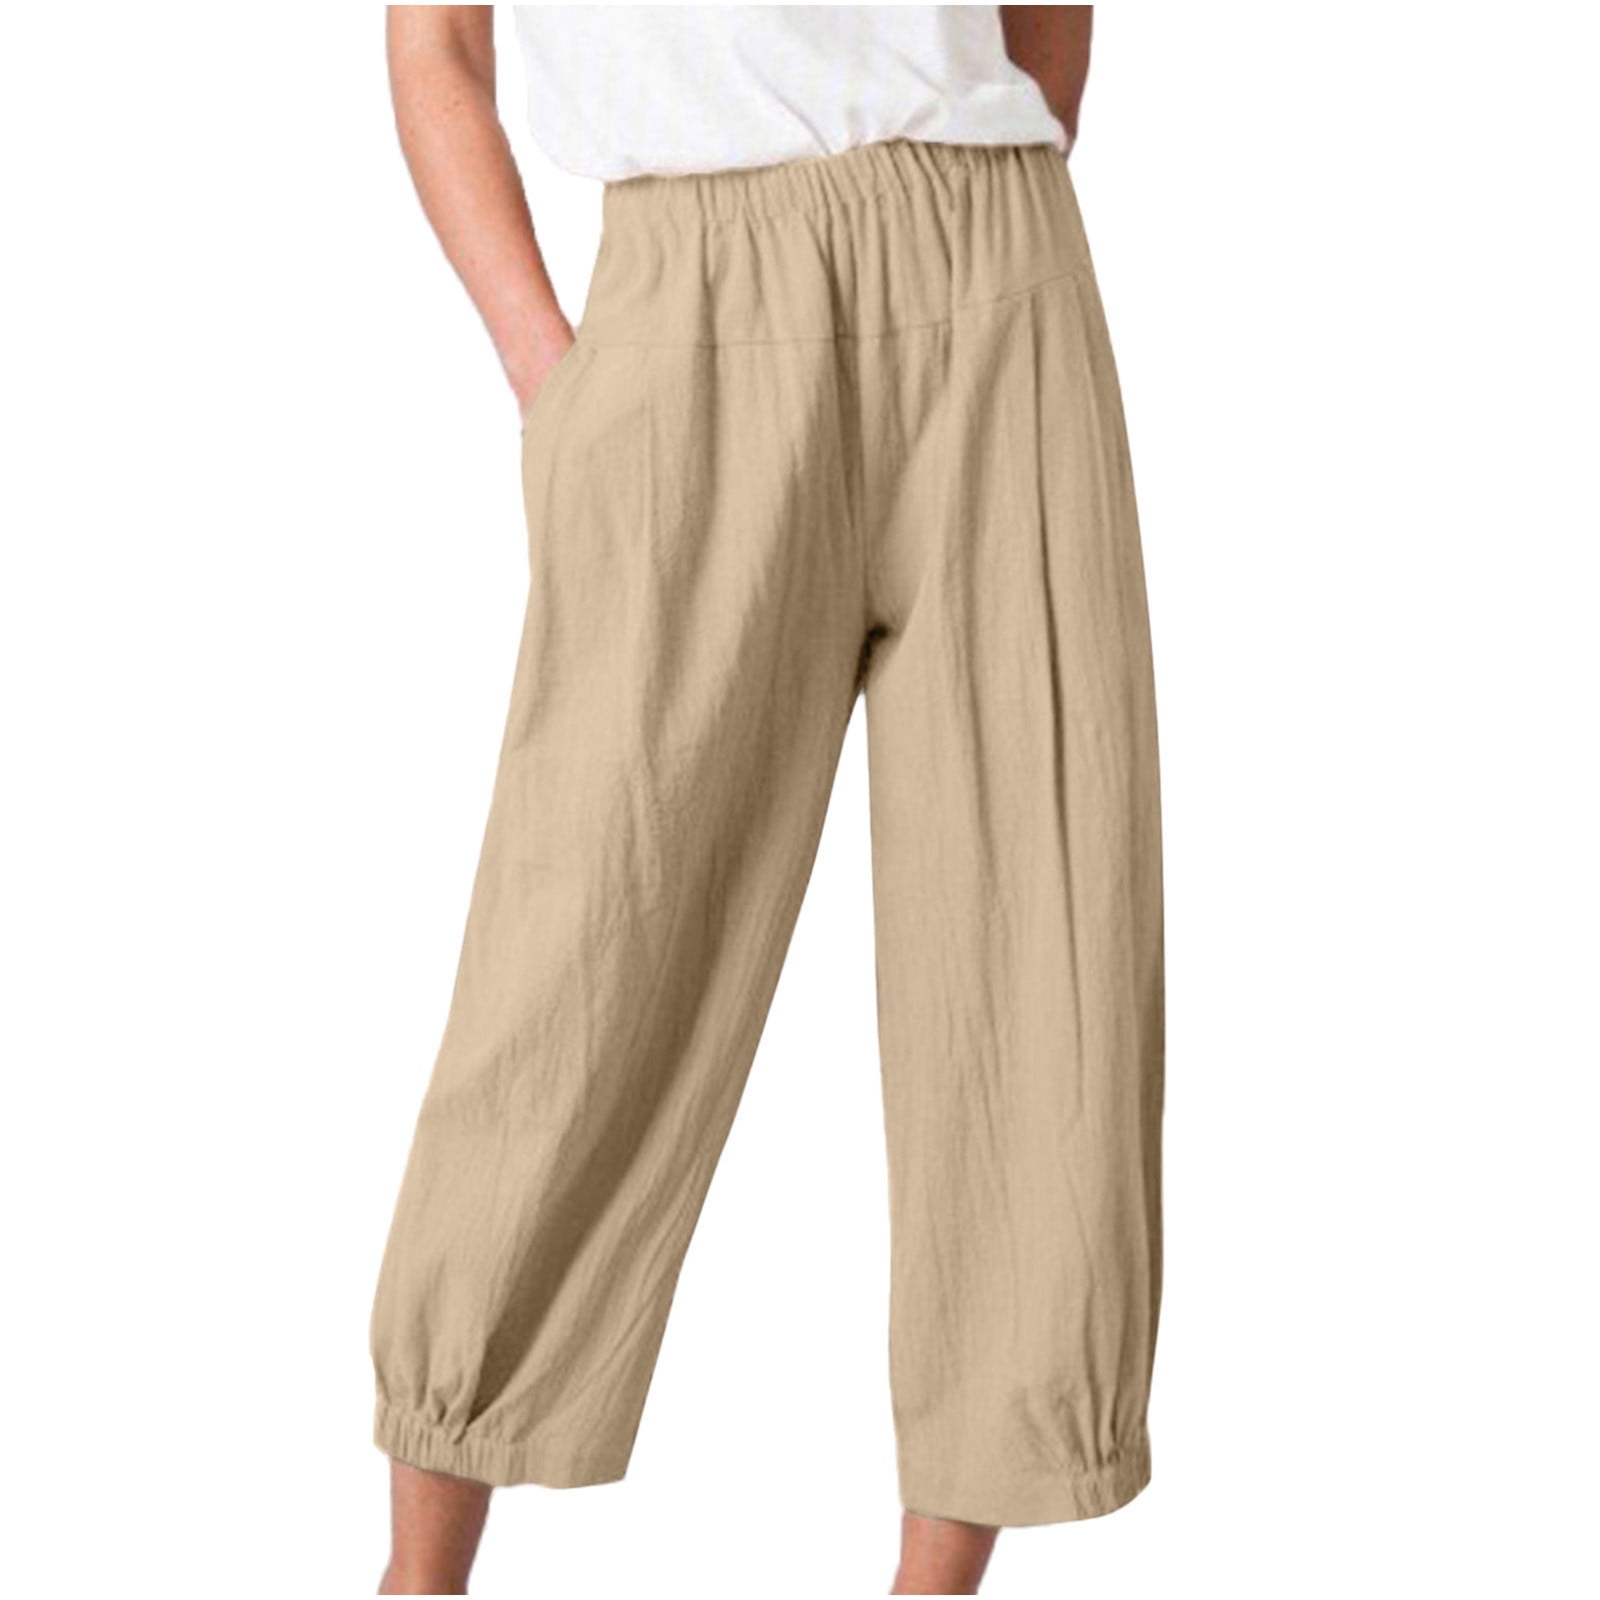 Capri Pants for Women Casual Summer Cotton Linen Pants Loose Elastic ...